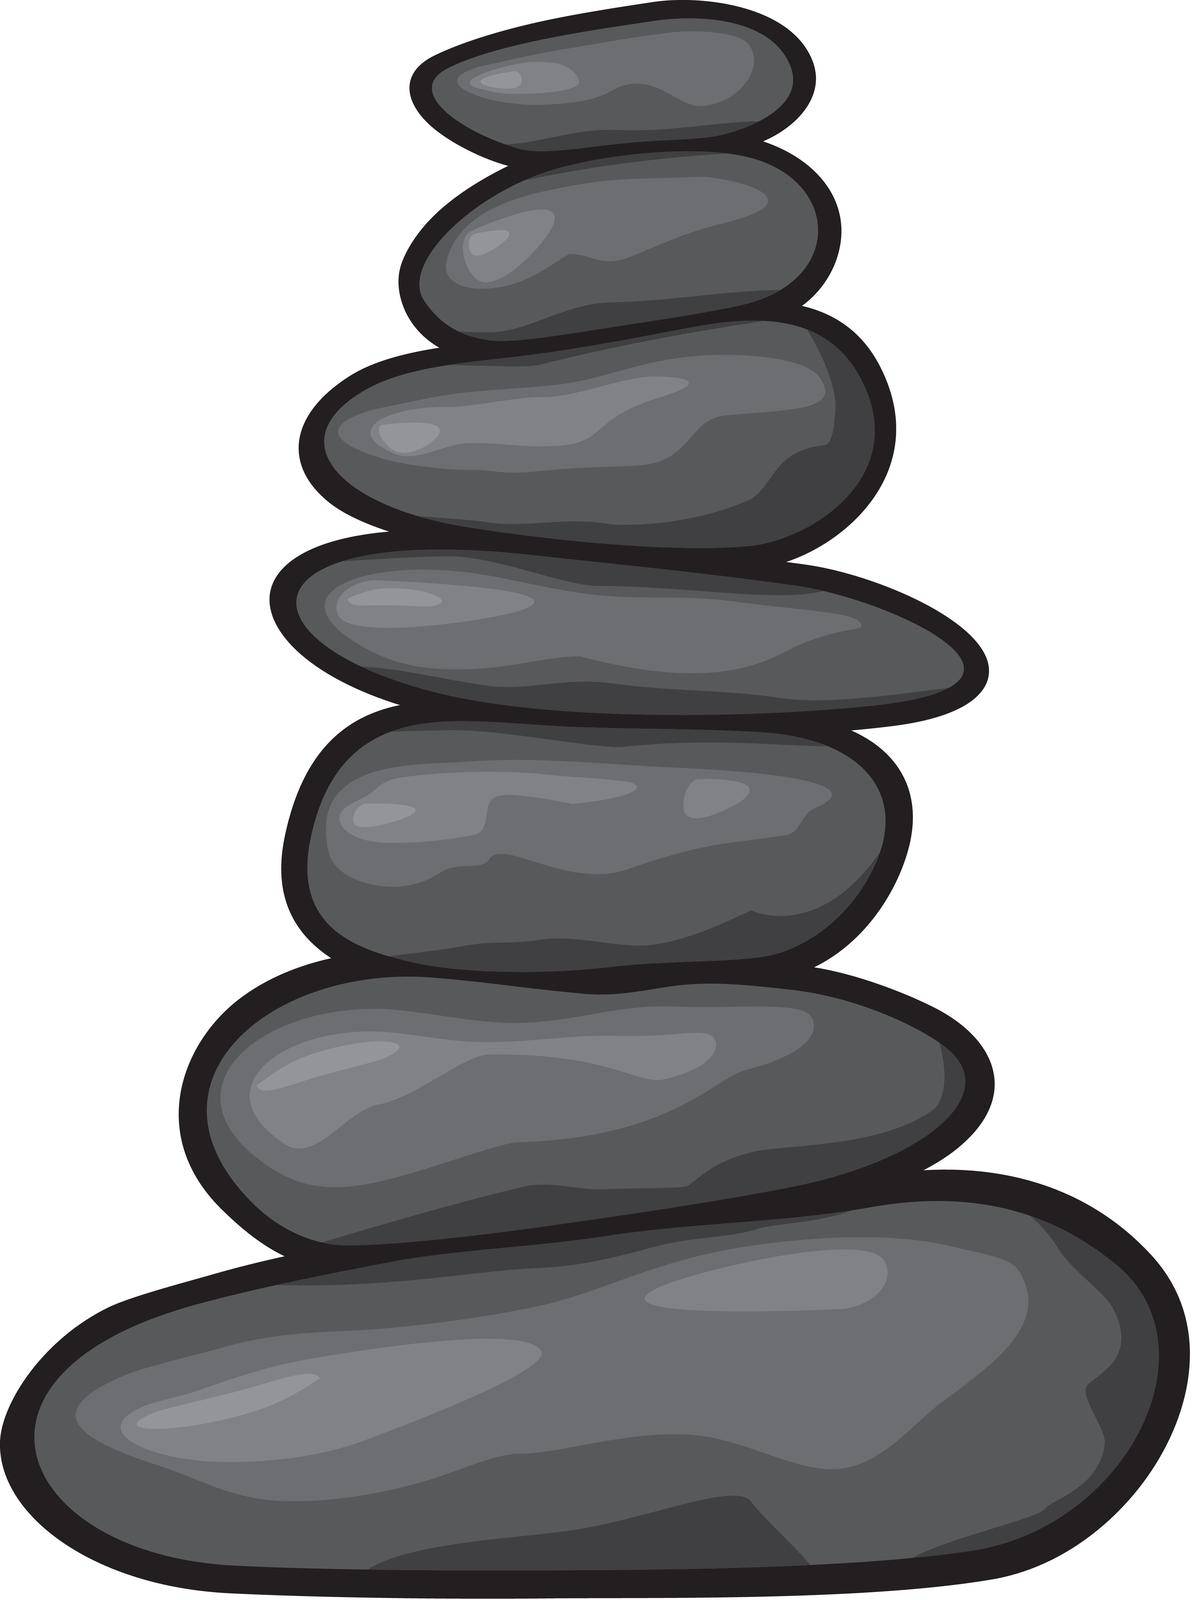 Zen stone vector illustration